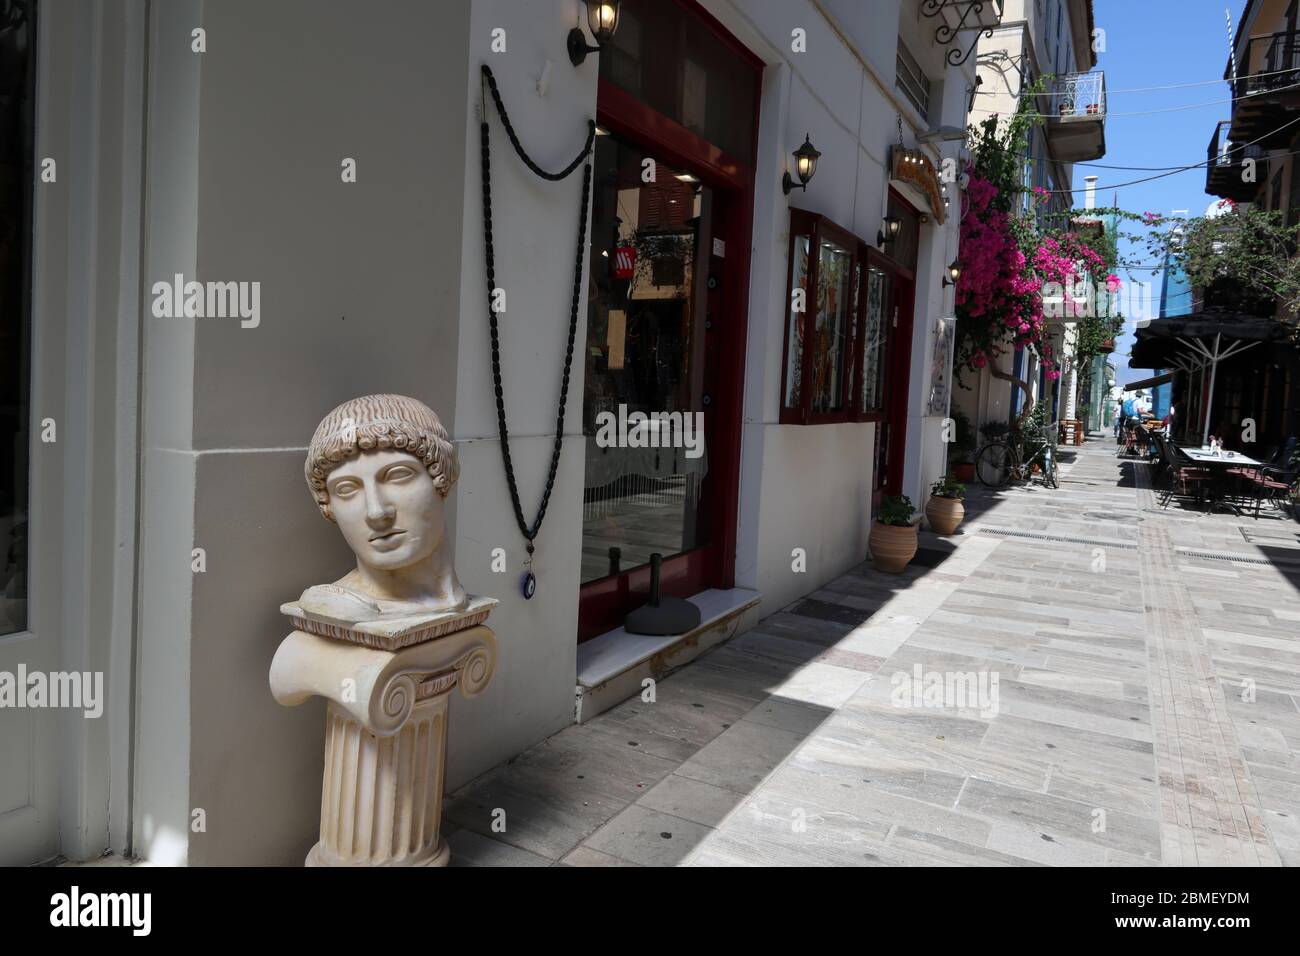 Shopping street in Nafplion, Greece Stock Photo